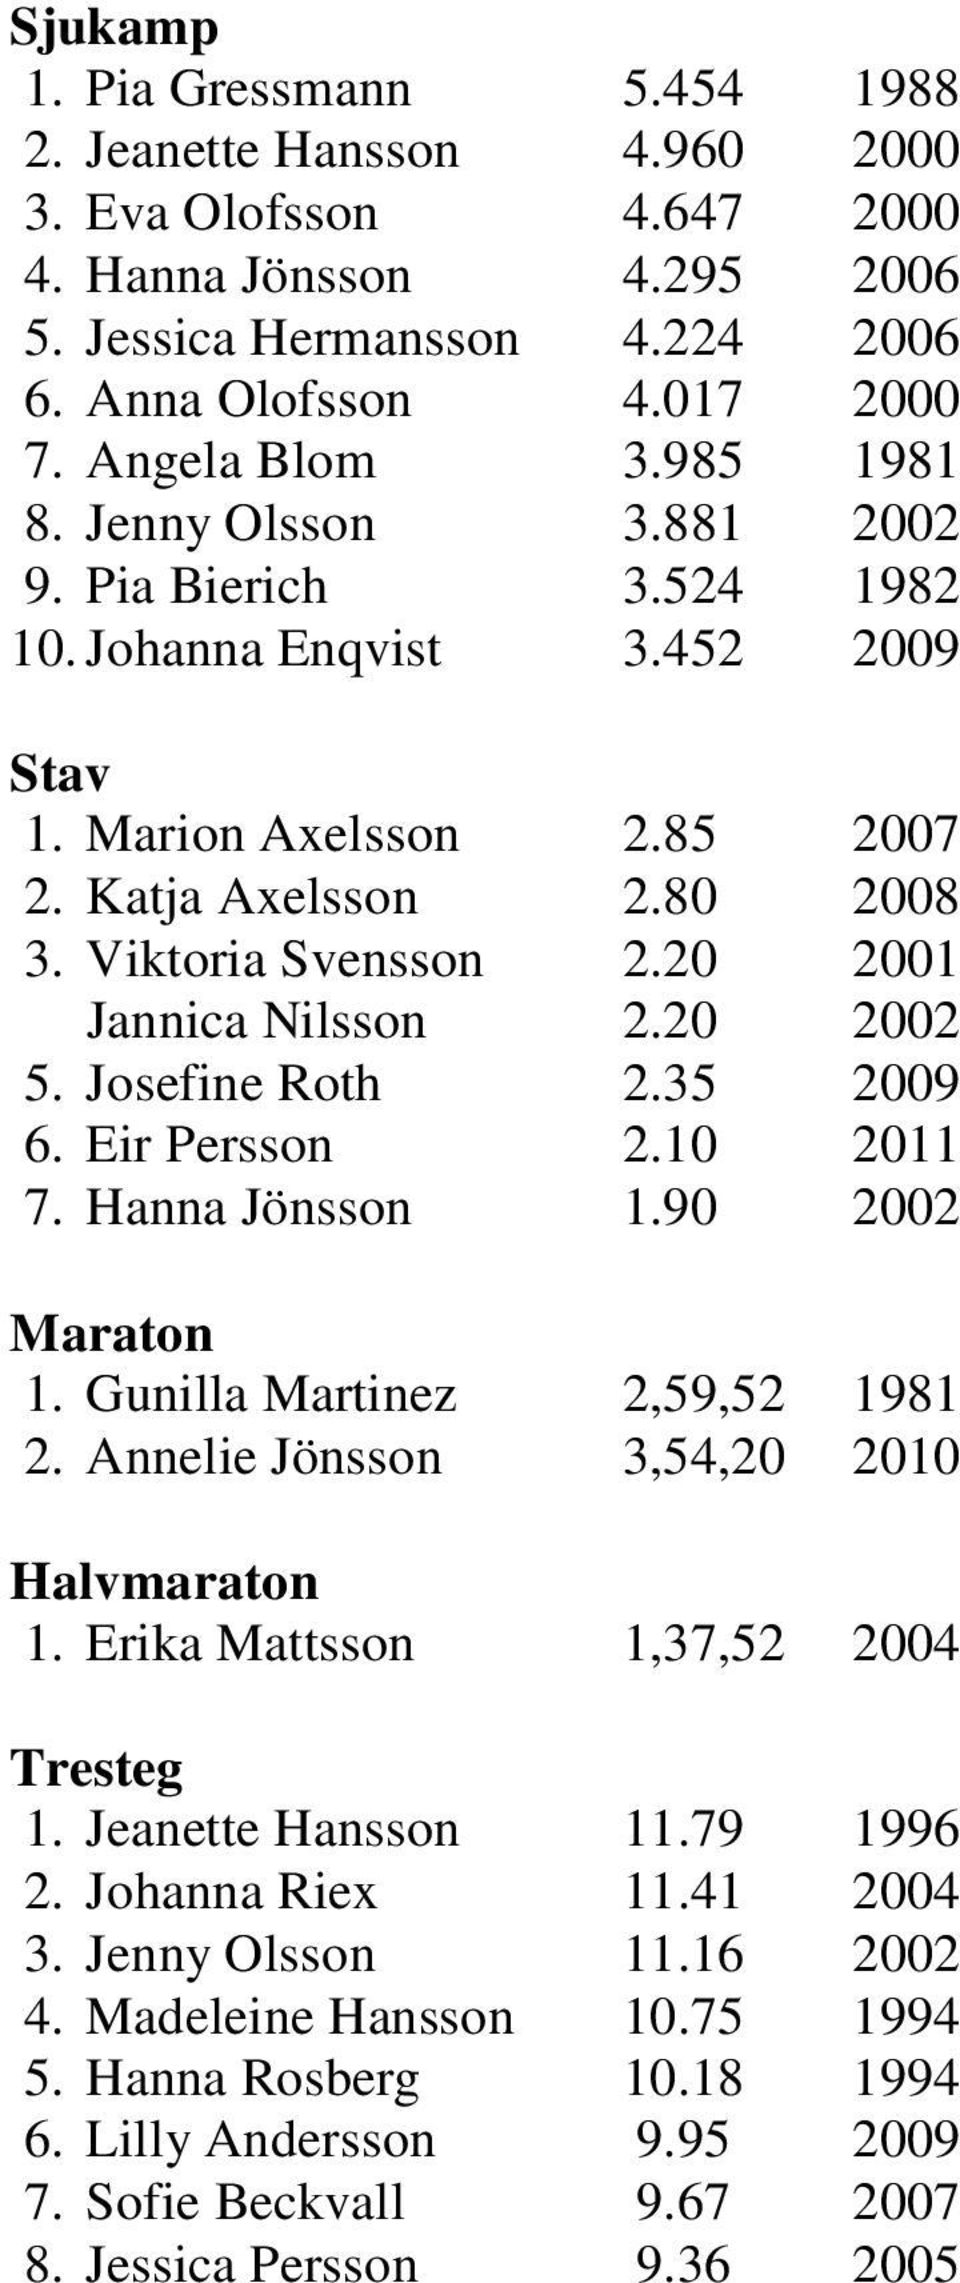 20 2001 Jannica Nilsson 2.20 2002 5. Josefine Roth 2.35 2009 6. Eir Persson 2.10 2011 7. Hanna Jönsson 1.90 2002 Maraton 1. Gunilla Martinez 2,59,52 1981 2. Annelie Jönsson 3,54,20 2010 Halvmaraton 1.